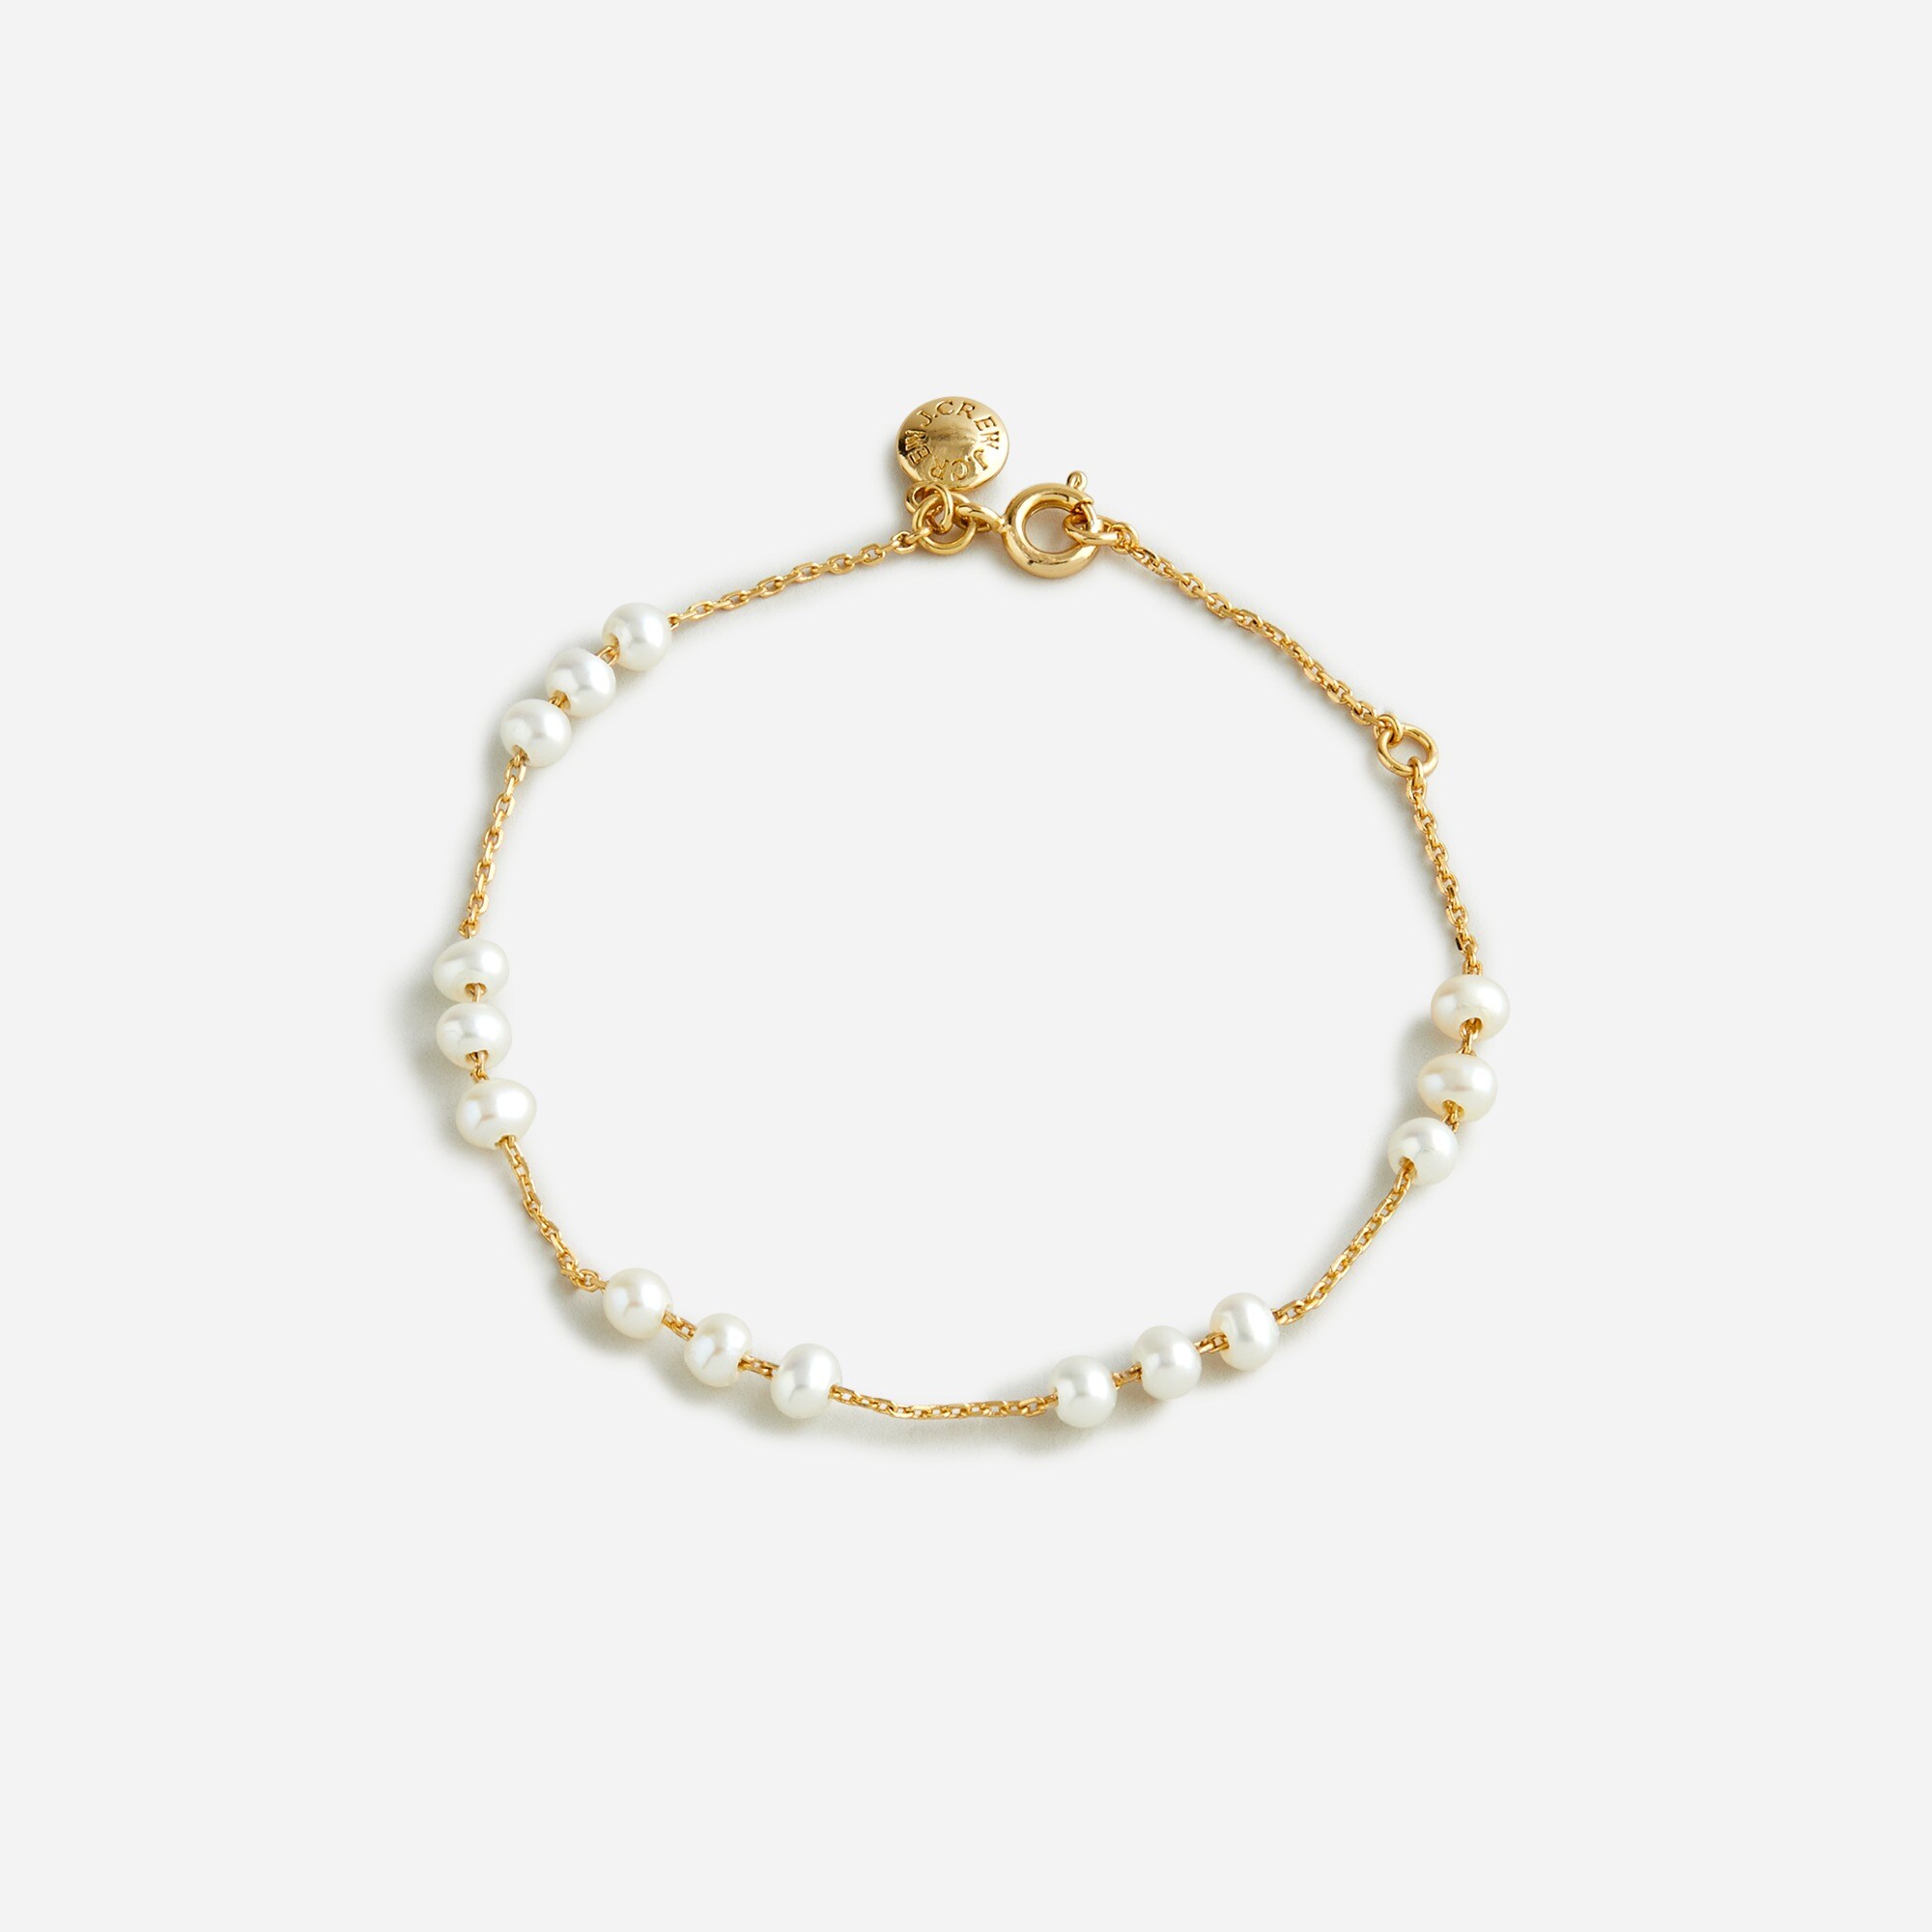  Freshwater pearl beaded adjustable bracelet